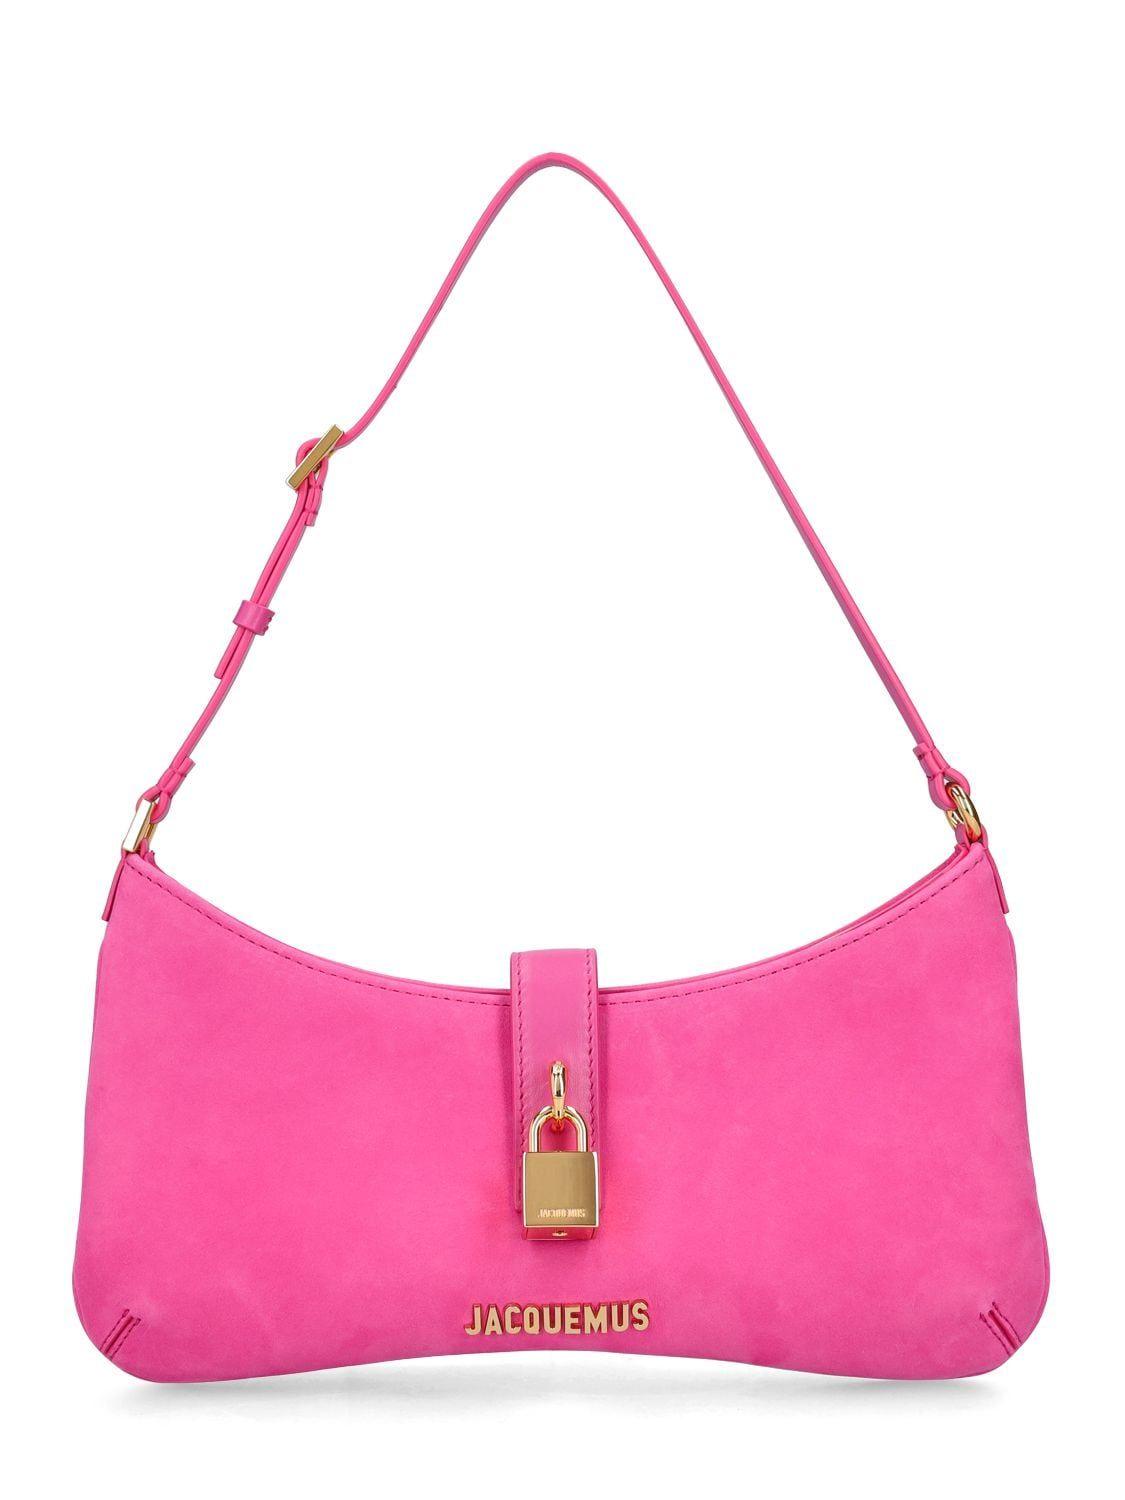 Jacquemus Le Bisou Cadenas Suede Shoulder Bag in Pink | Lyst